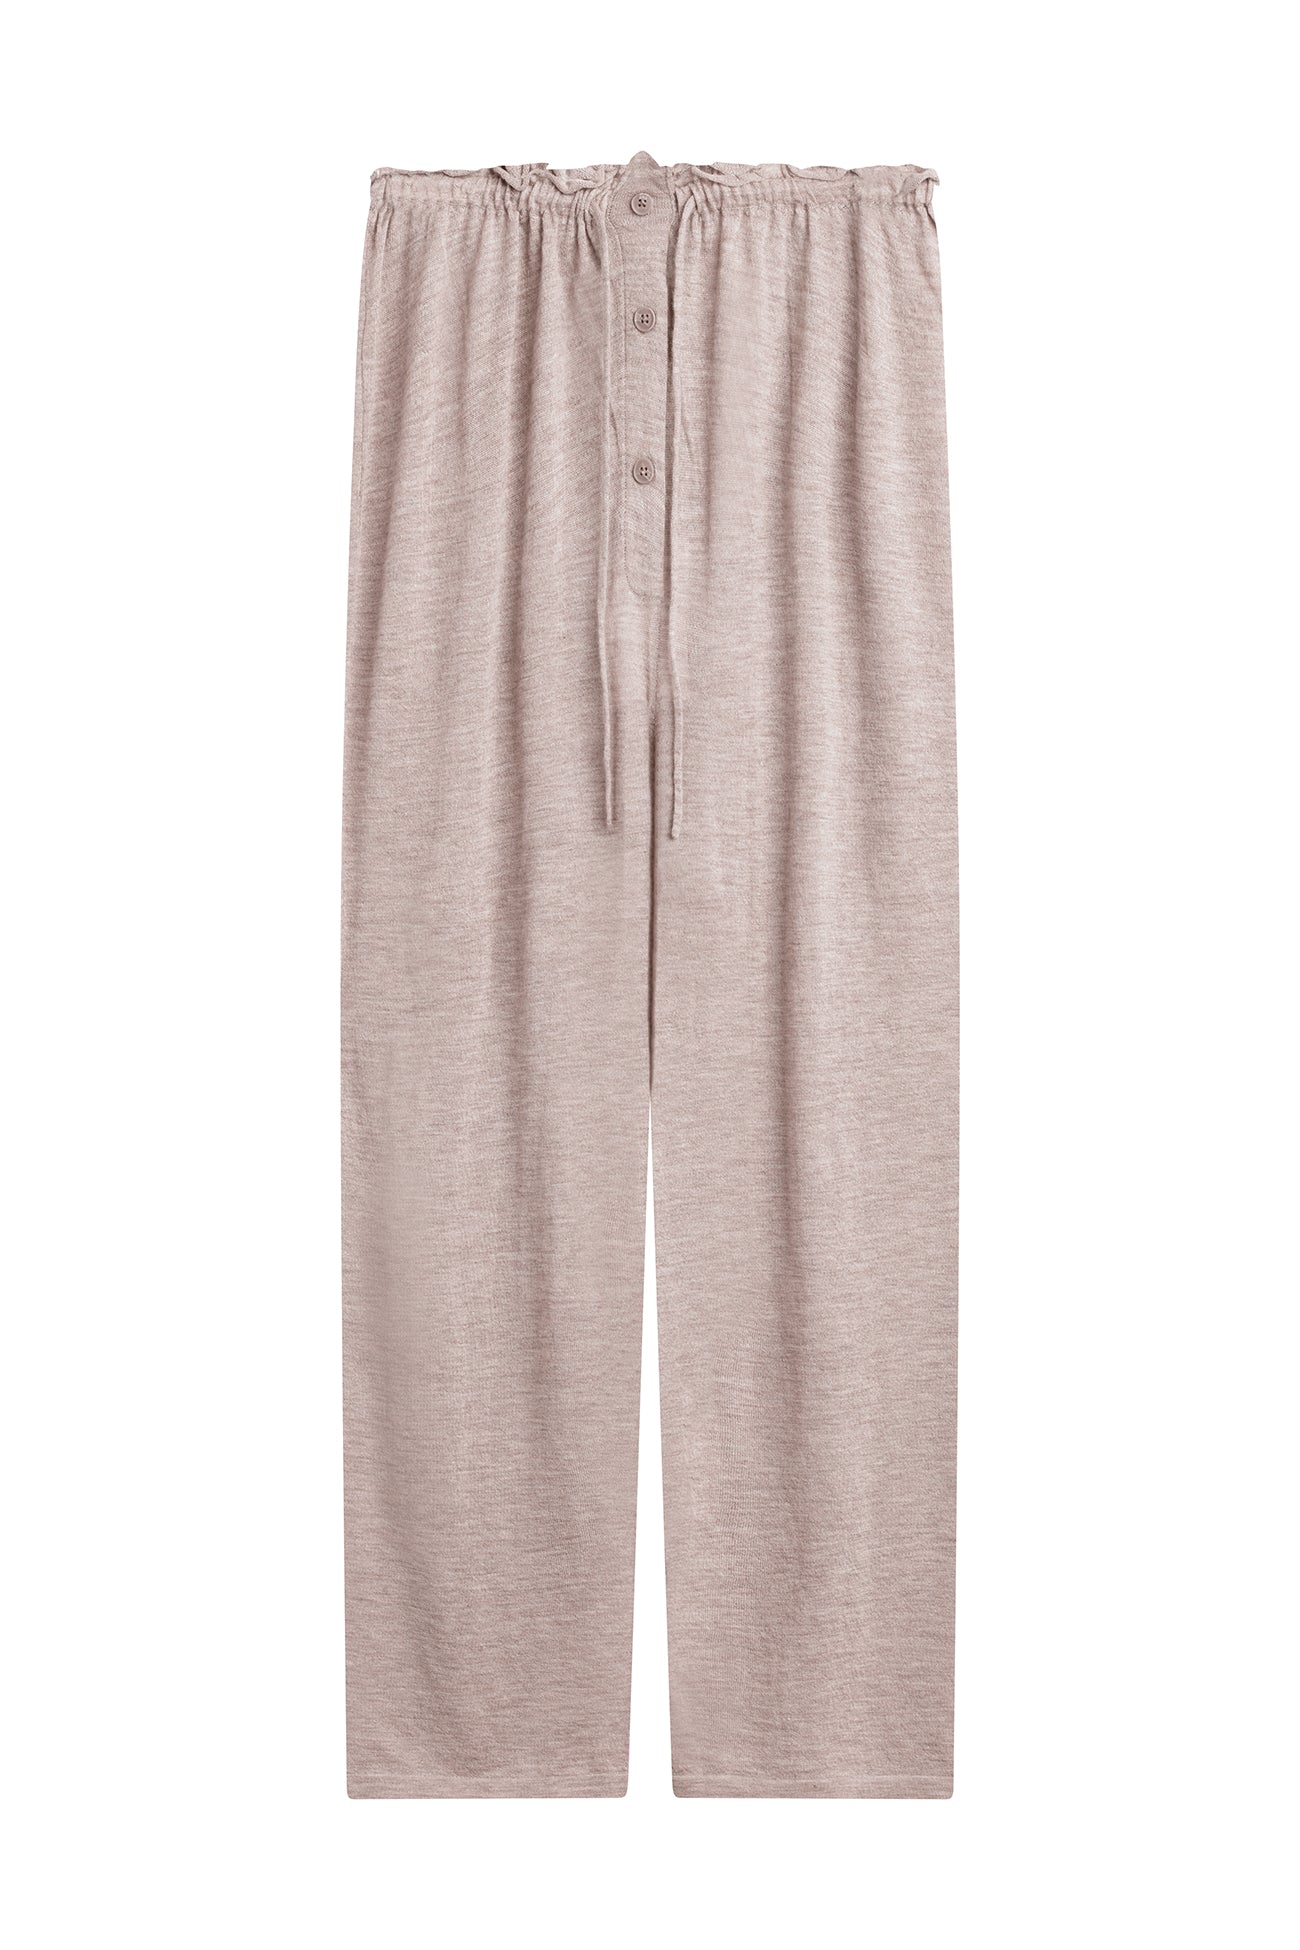 Naked Cashmere – Siena Pajama Set